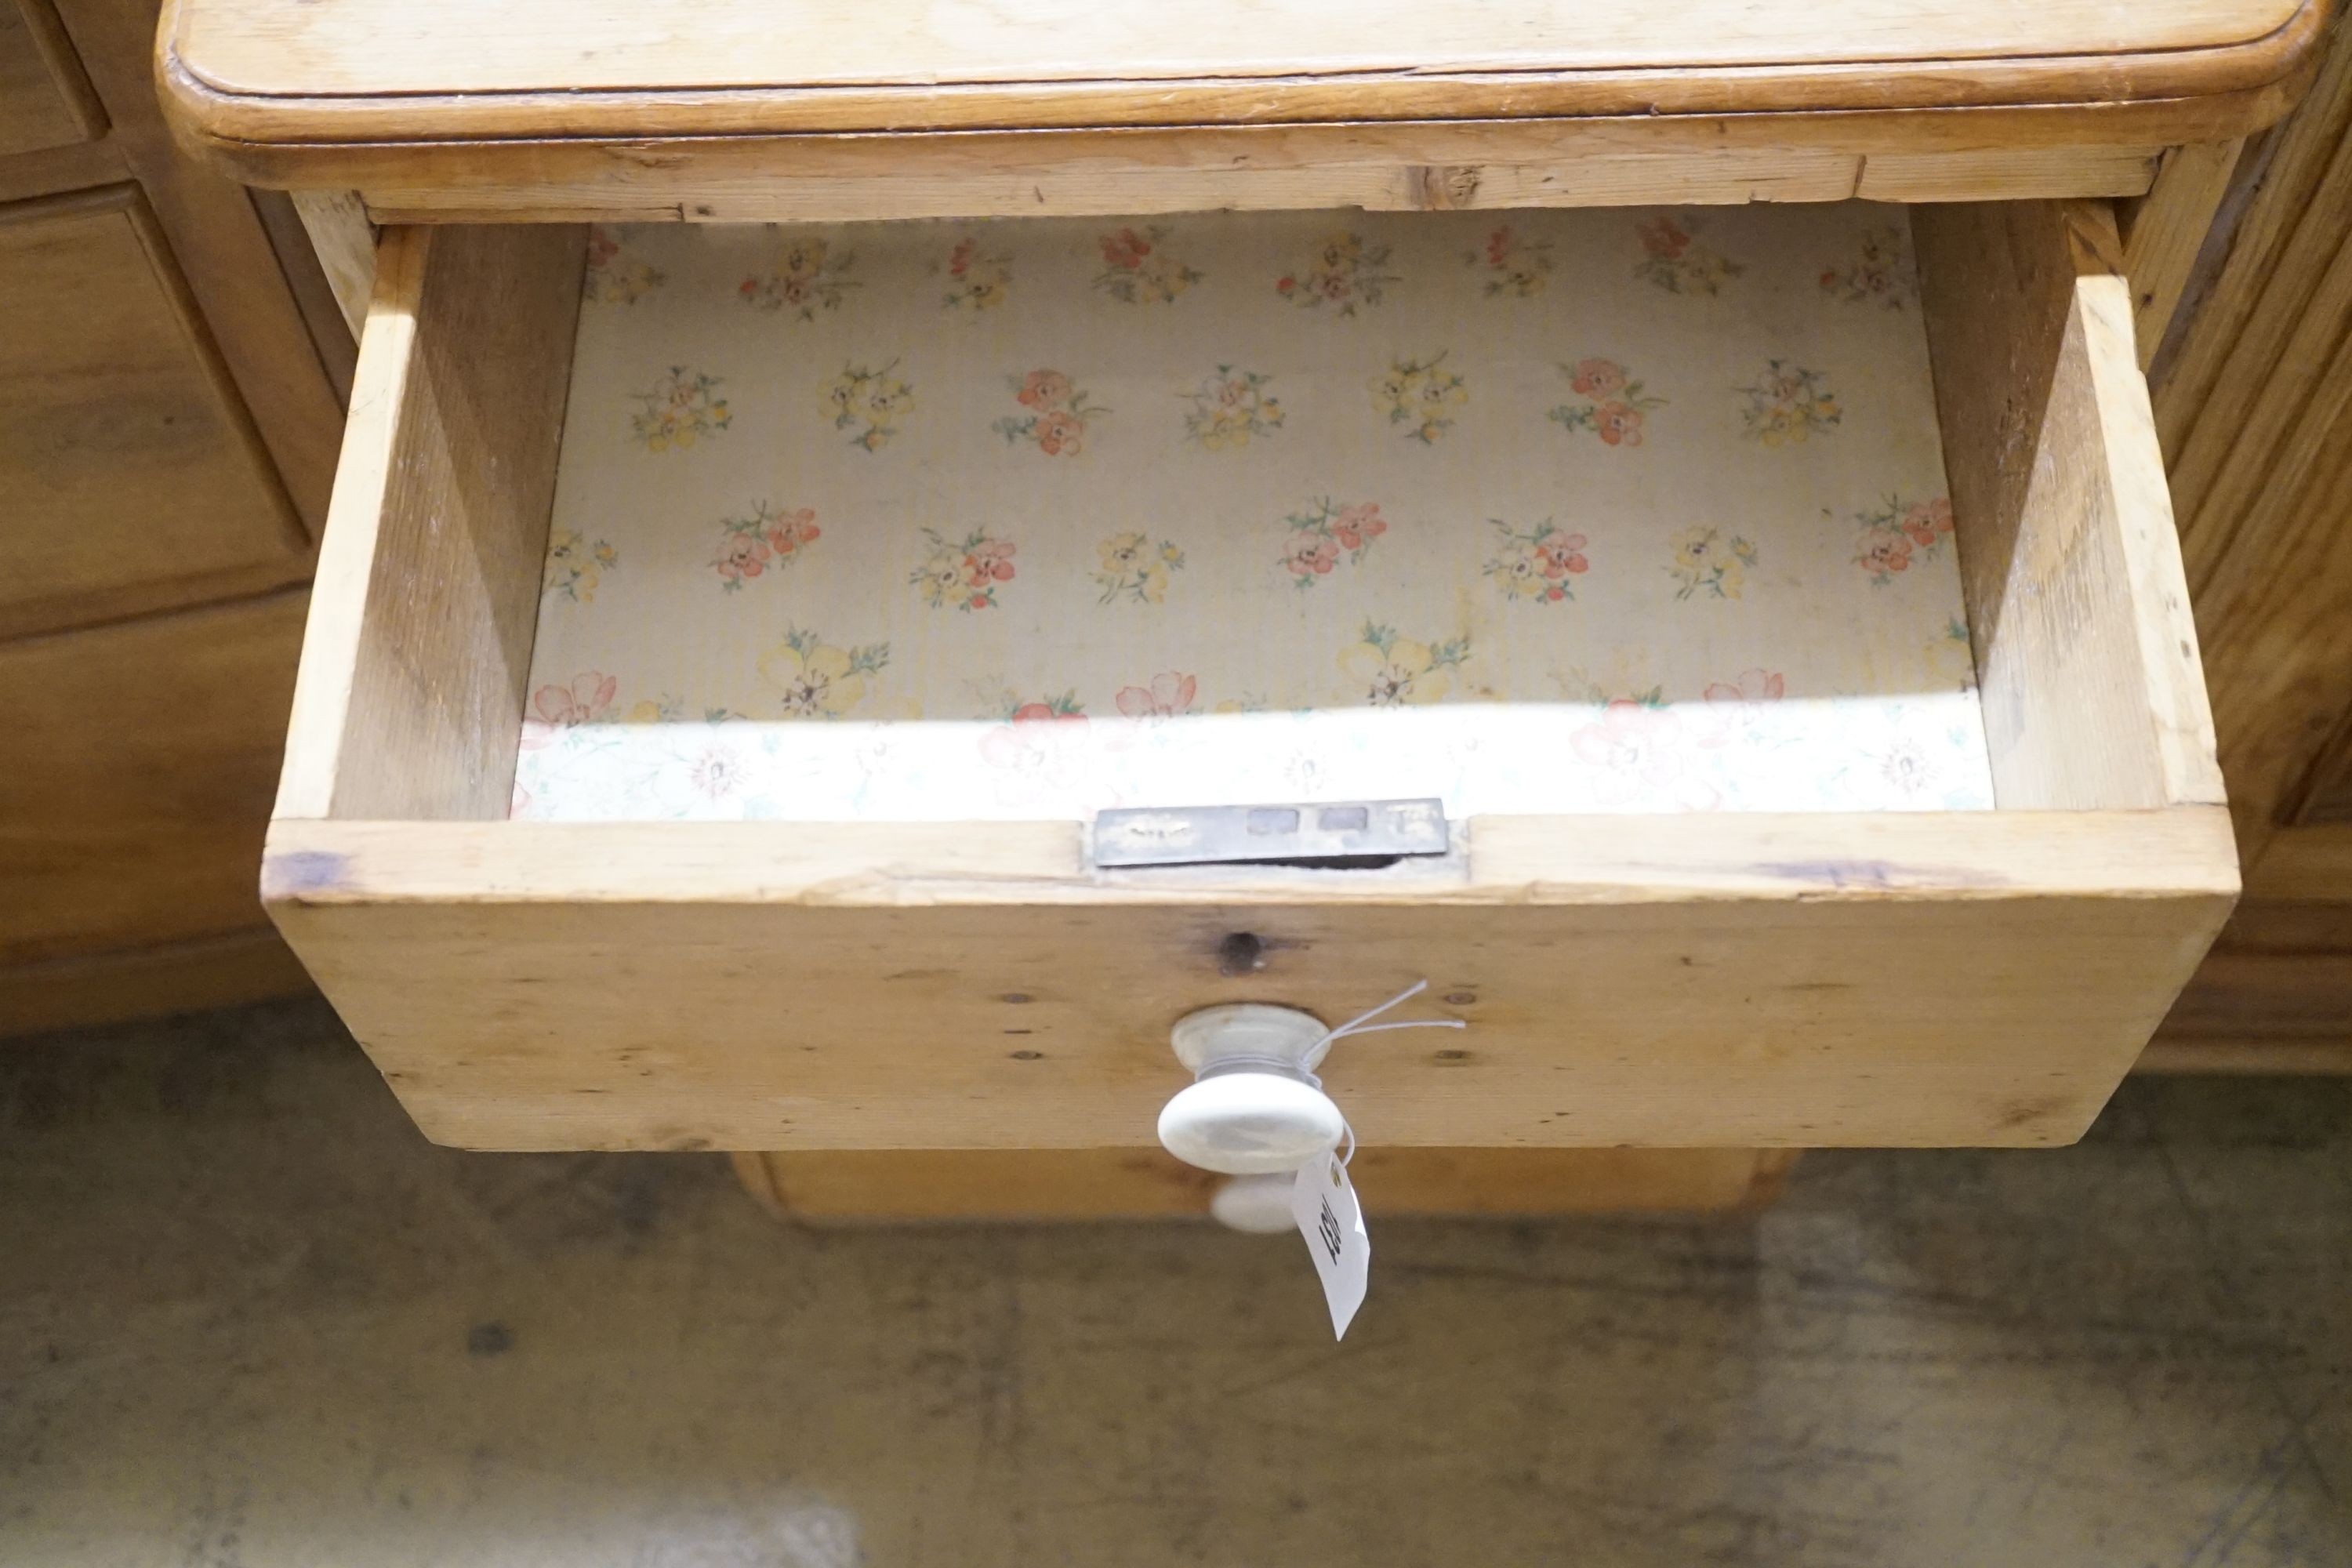 A Victorian pine four drawer chest, width 45cm depth 53cm height 72cm